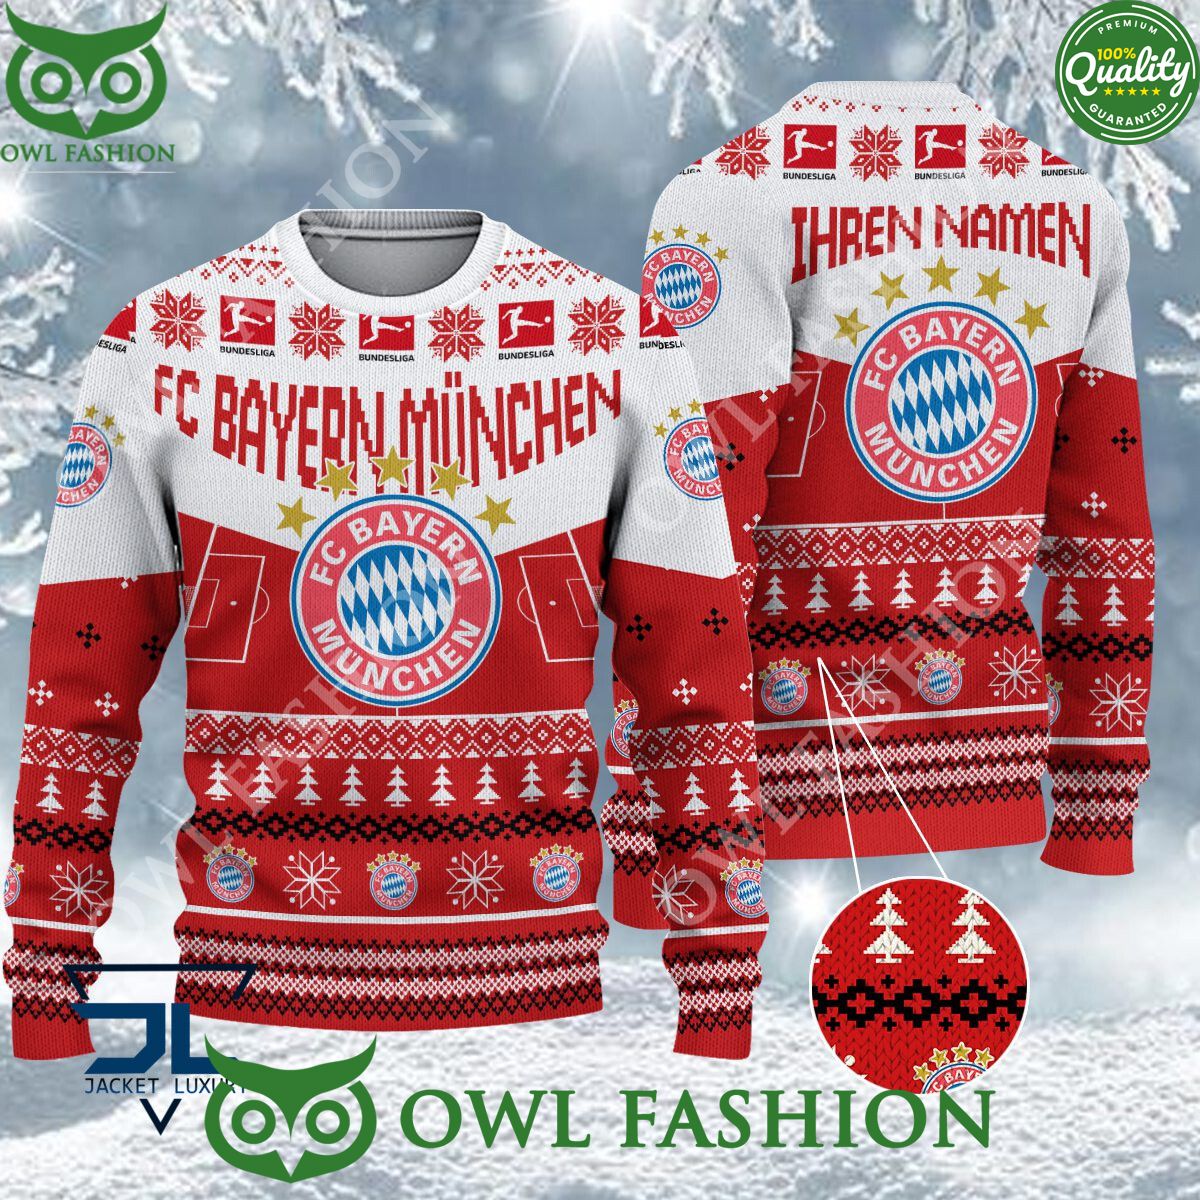 fc bayern munchen limited for bundesliga fans ugly sweater jumper 1 wCdQn.jpg